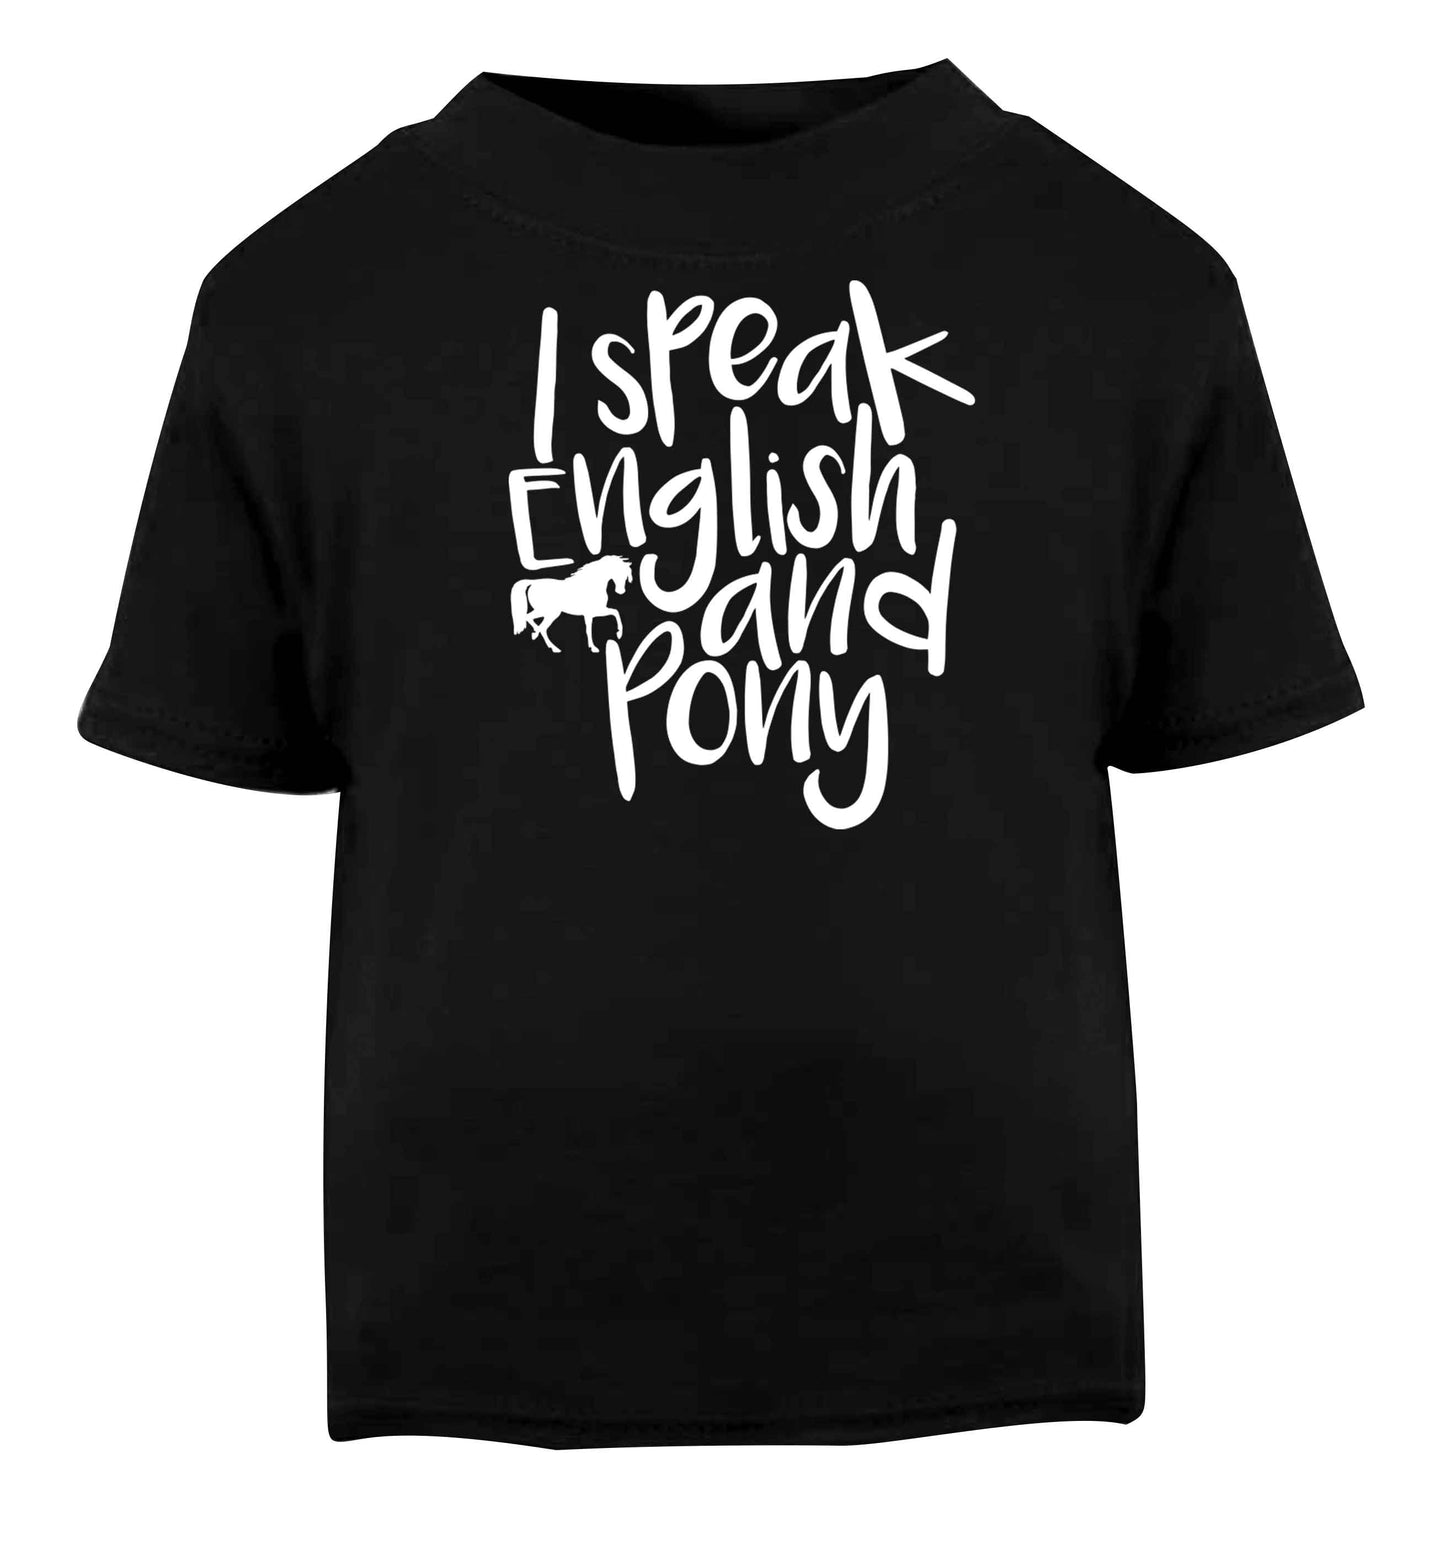 I speak English and pony Black baby toddler Tshirt 2 years